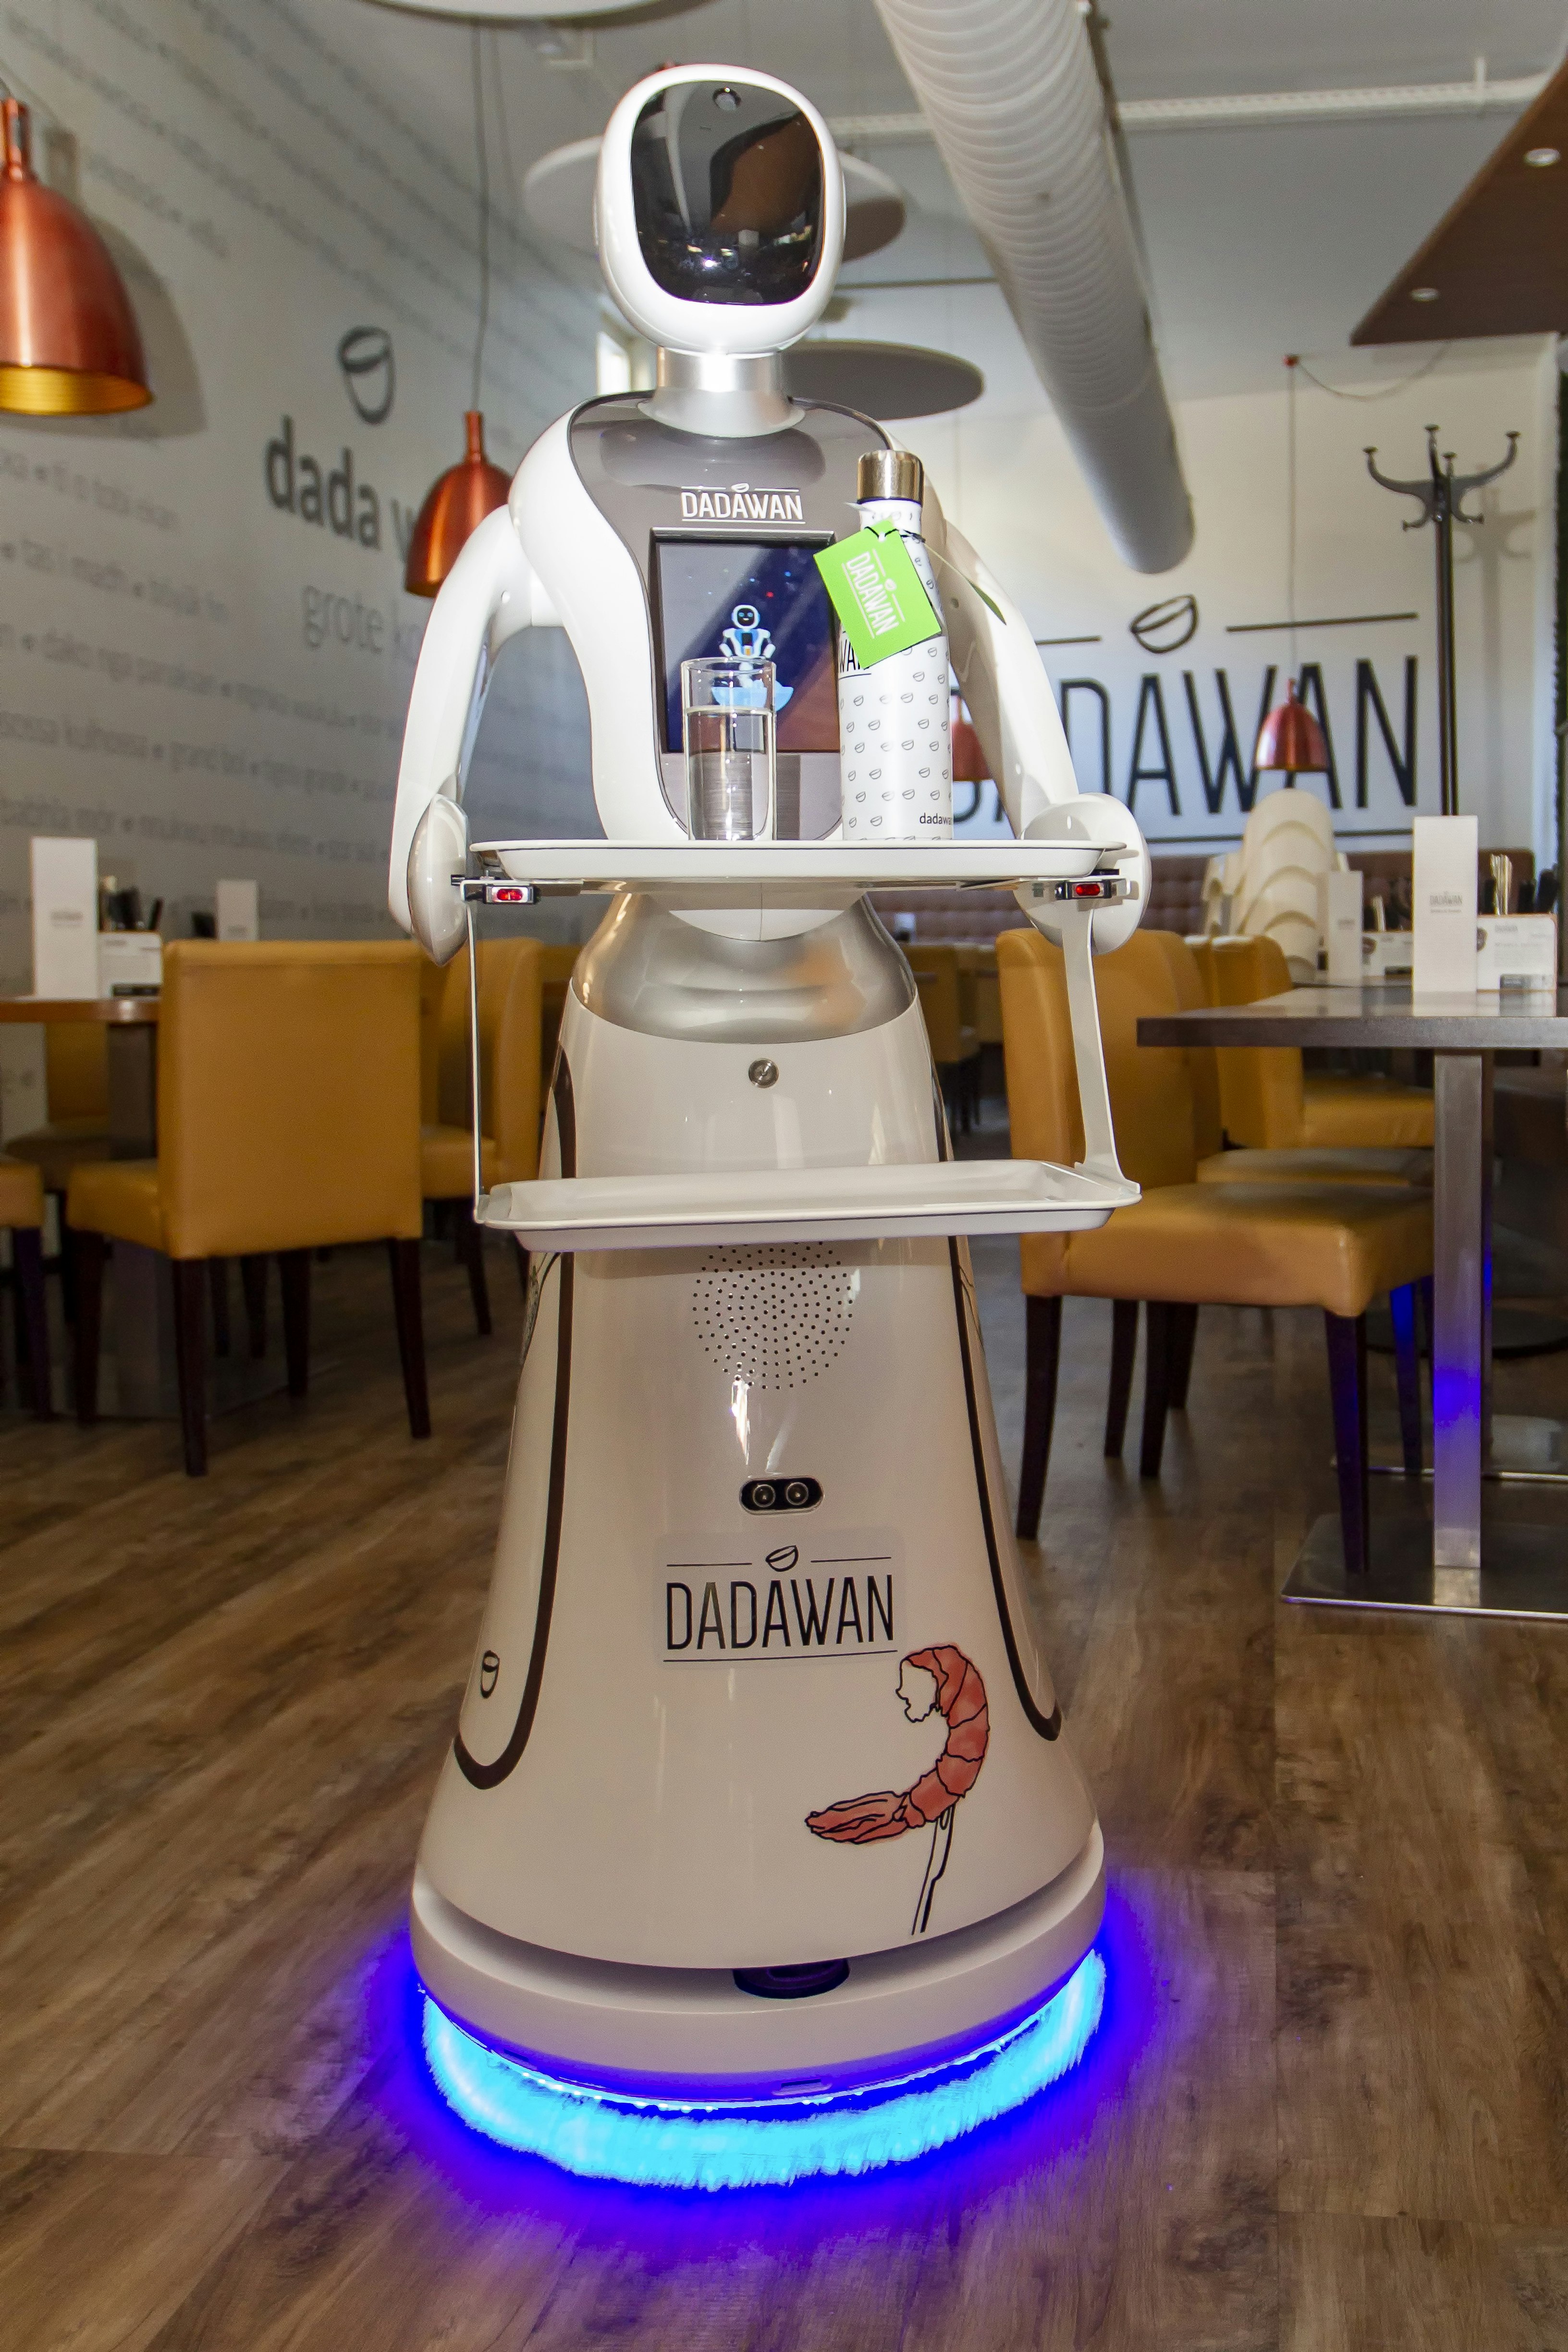 Robots used in restaurant Dadawan in Maastricht